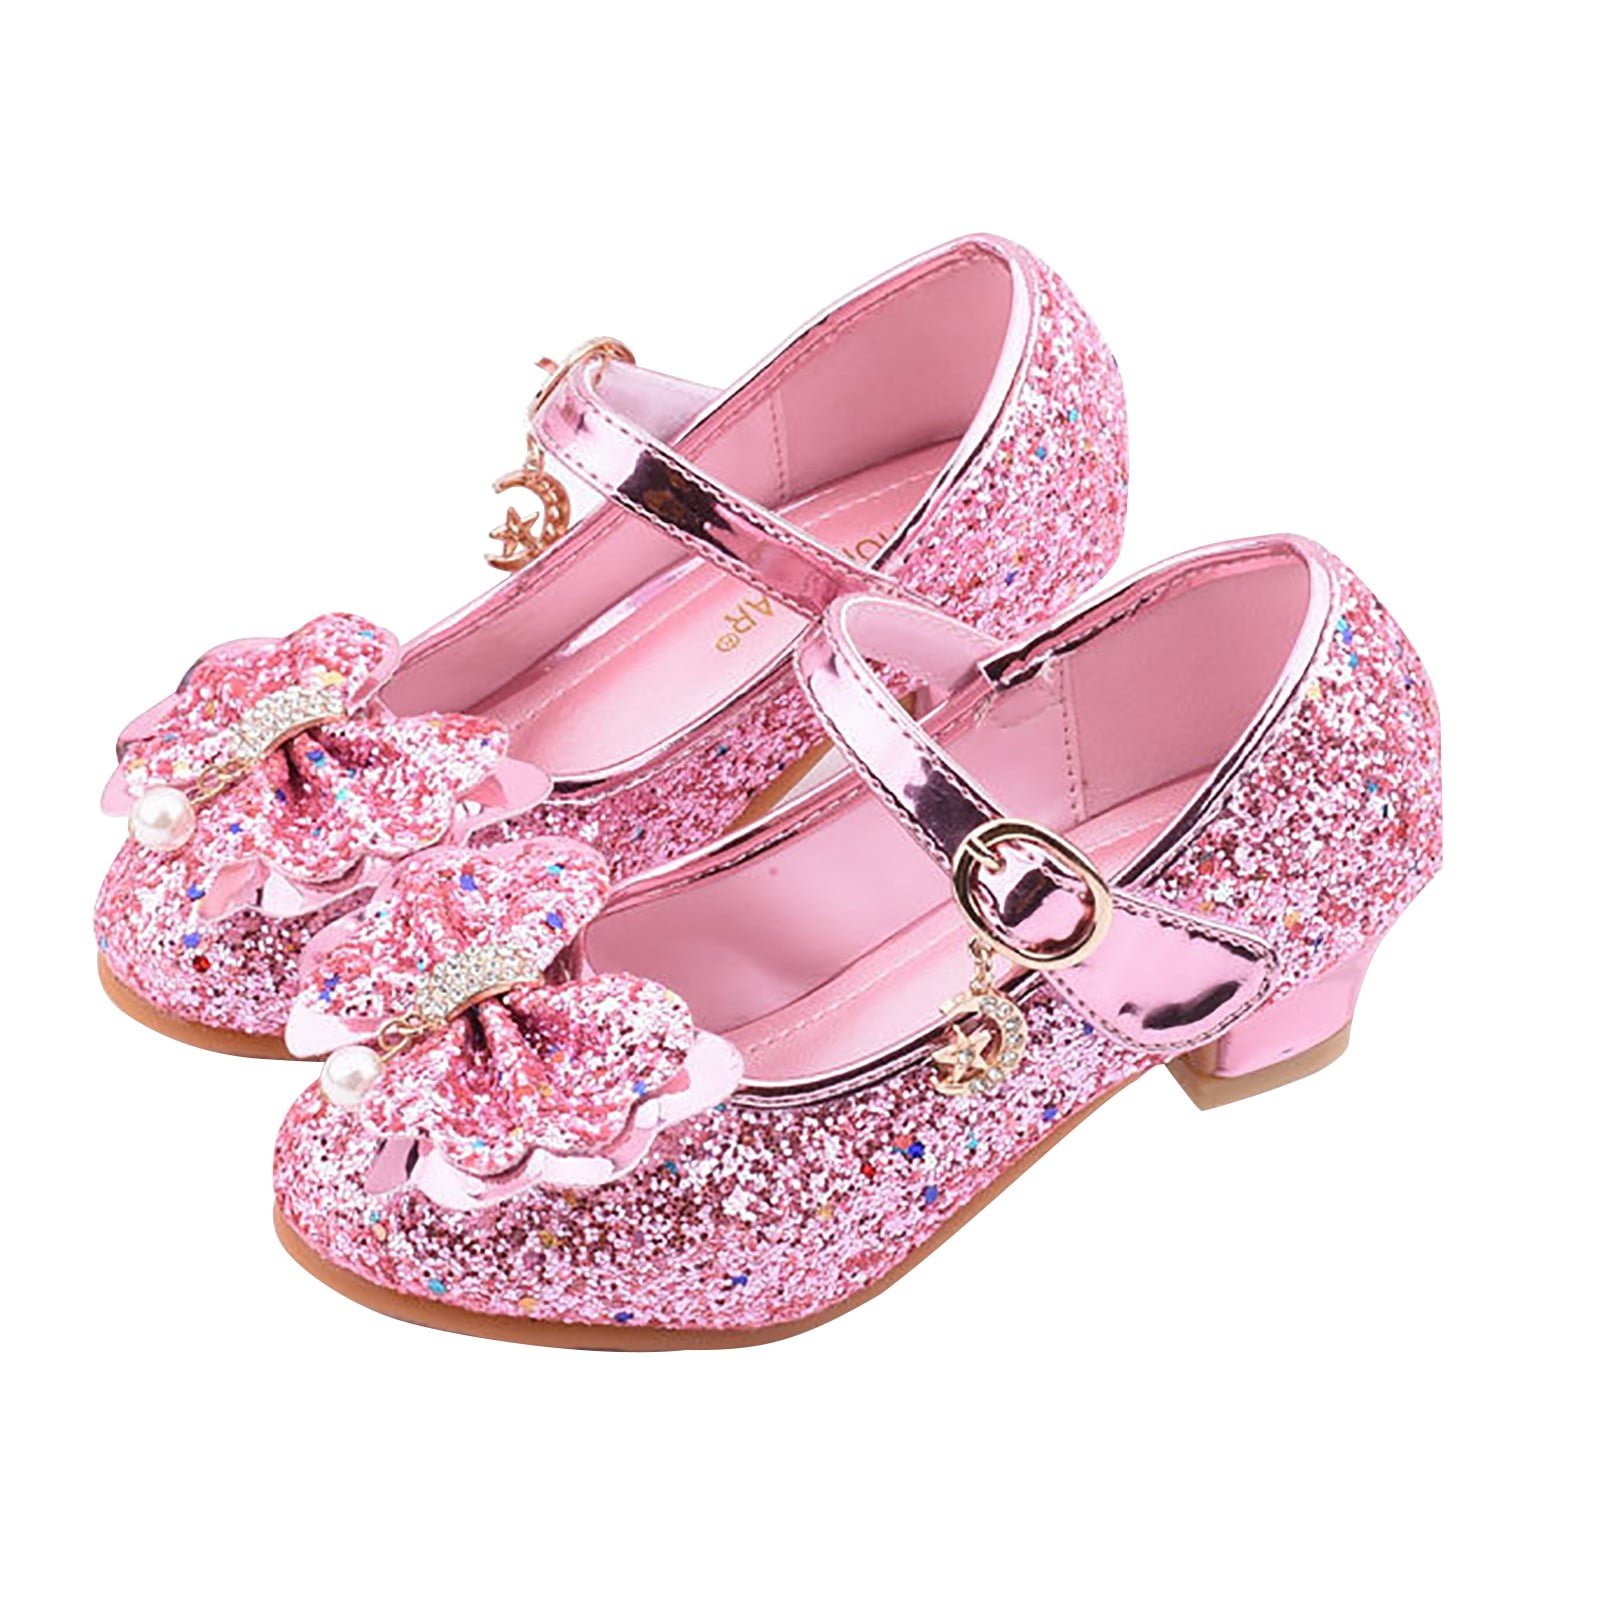 Kids Girls Crystal Bowknot Pearl Princess Dance Single Casual Shoes US Stock